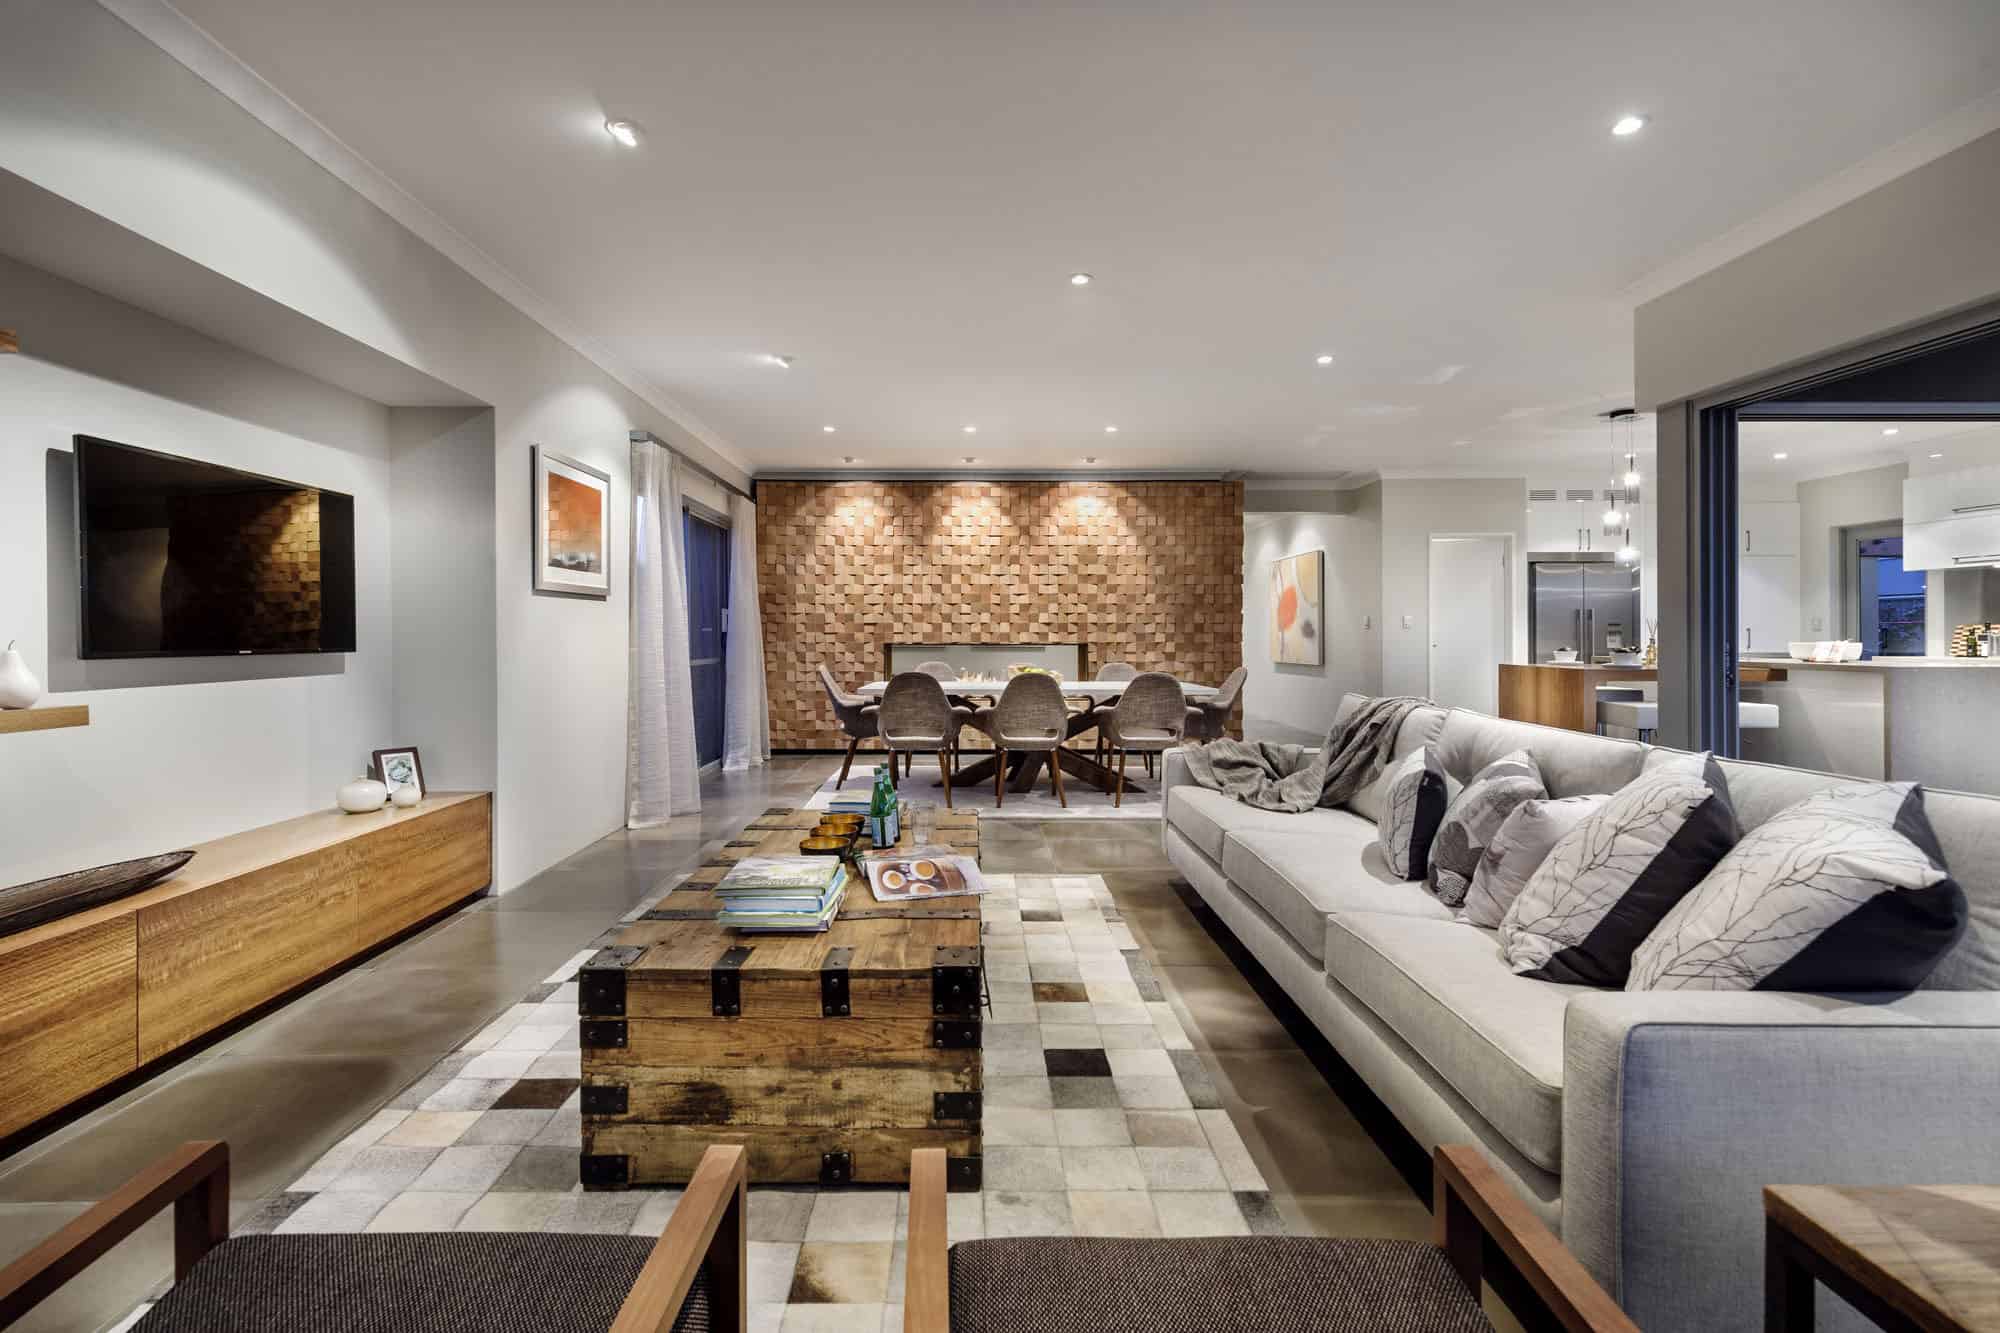 Super Cozy Elegant Home combines Craftsmanship with Rustic Elements